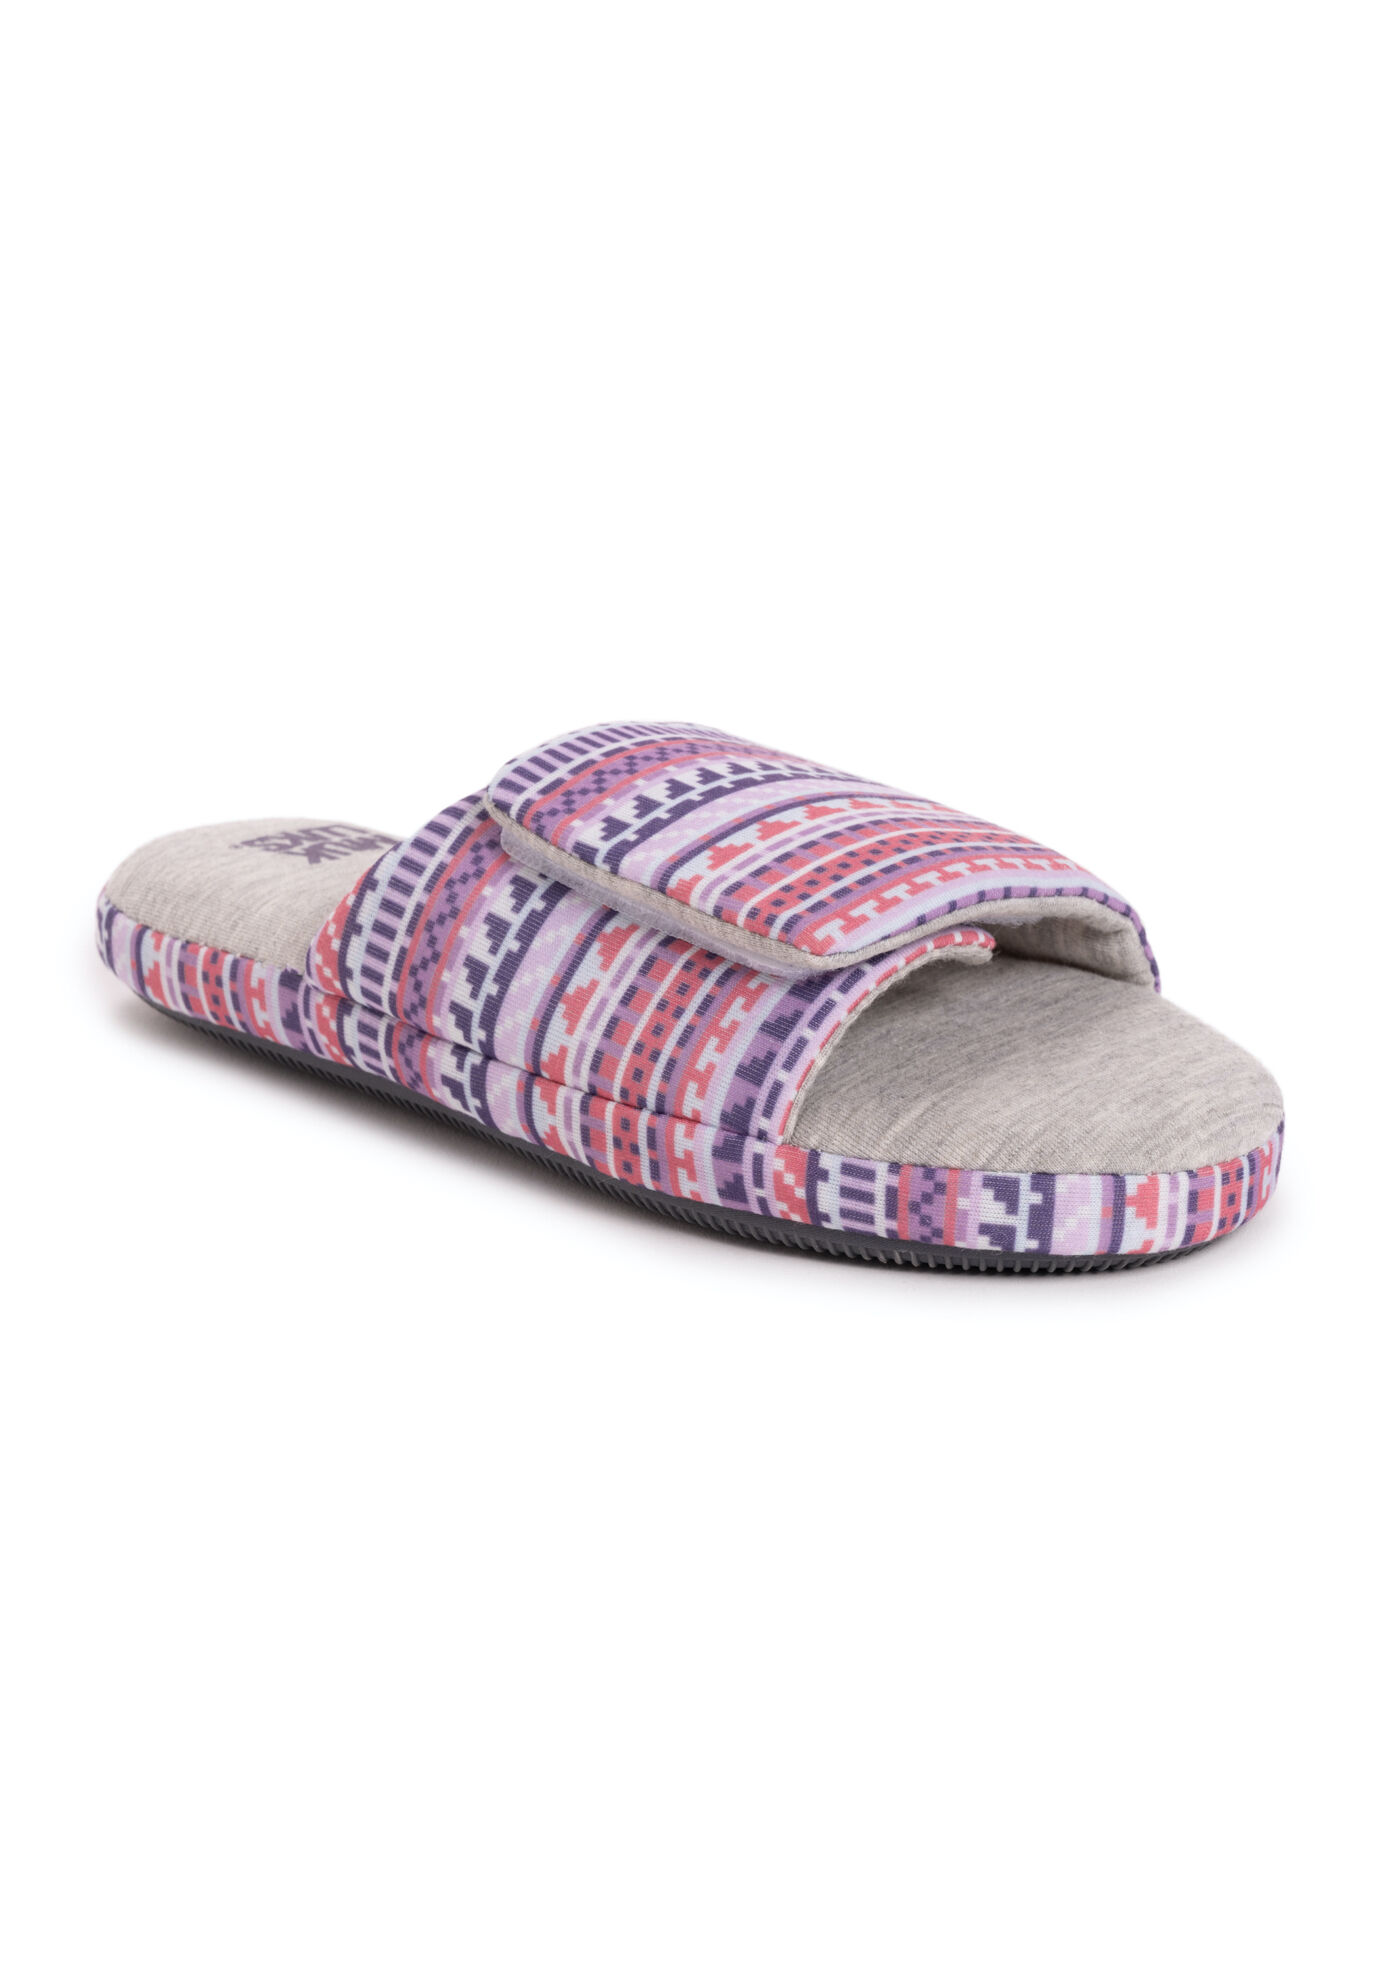 Women's Ansley Jersey Slide Slippers by MUK LUKS in Pink Purple (Size MEDIUM)